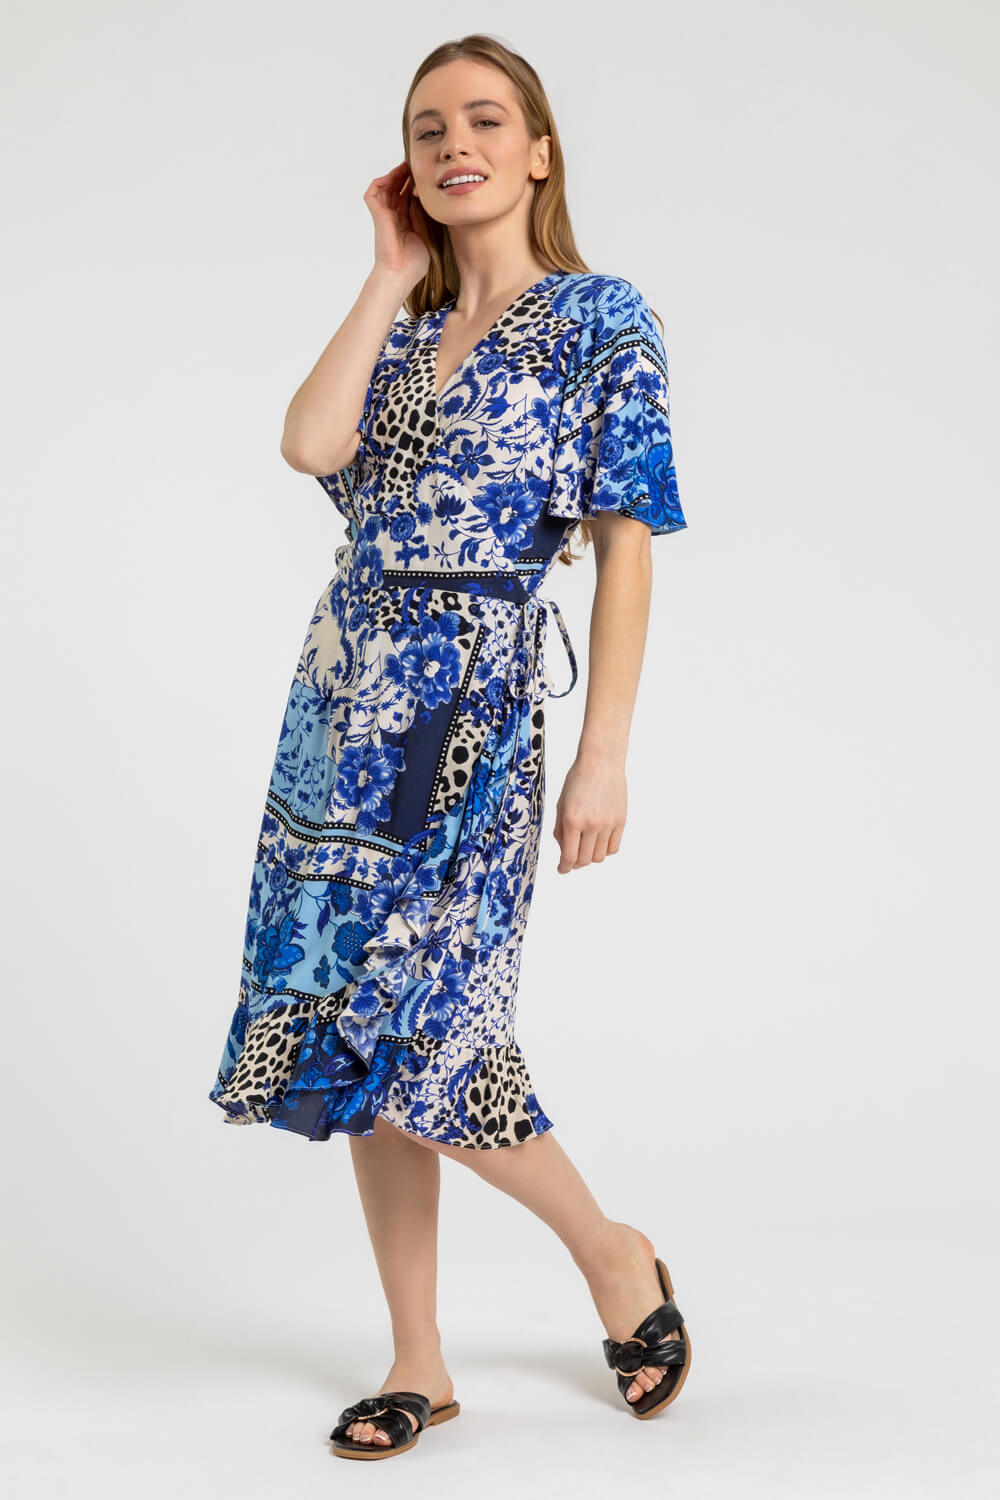 Petite Floral Contrast Print Wrap Dress in Blue - Roman Originals UK